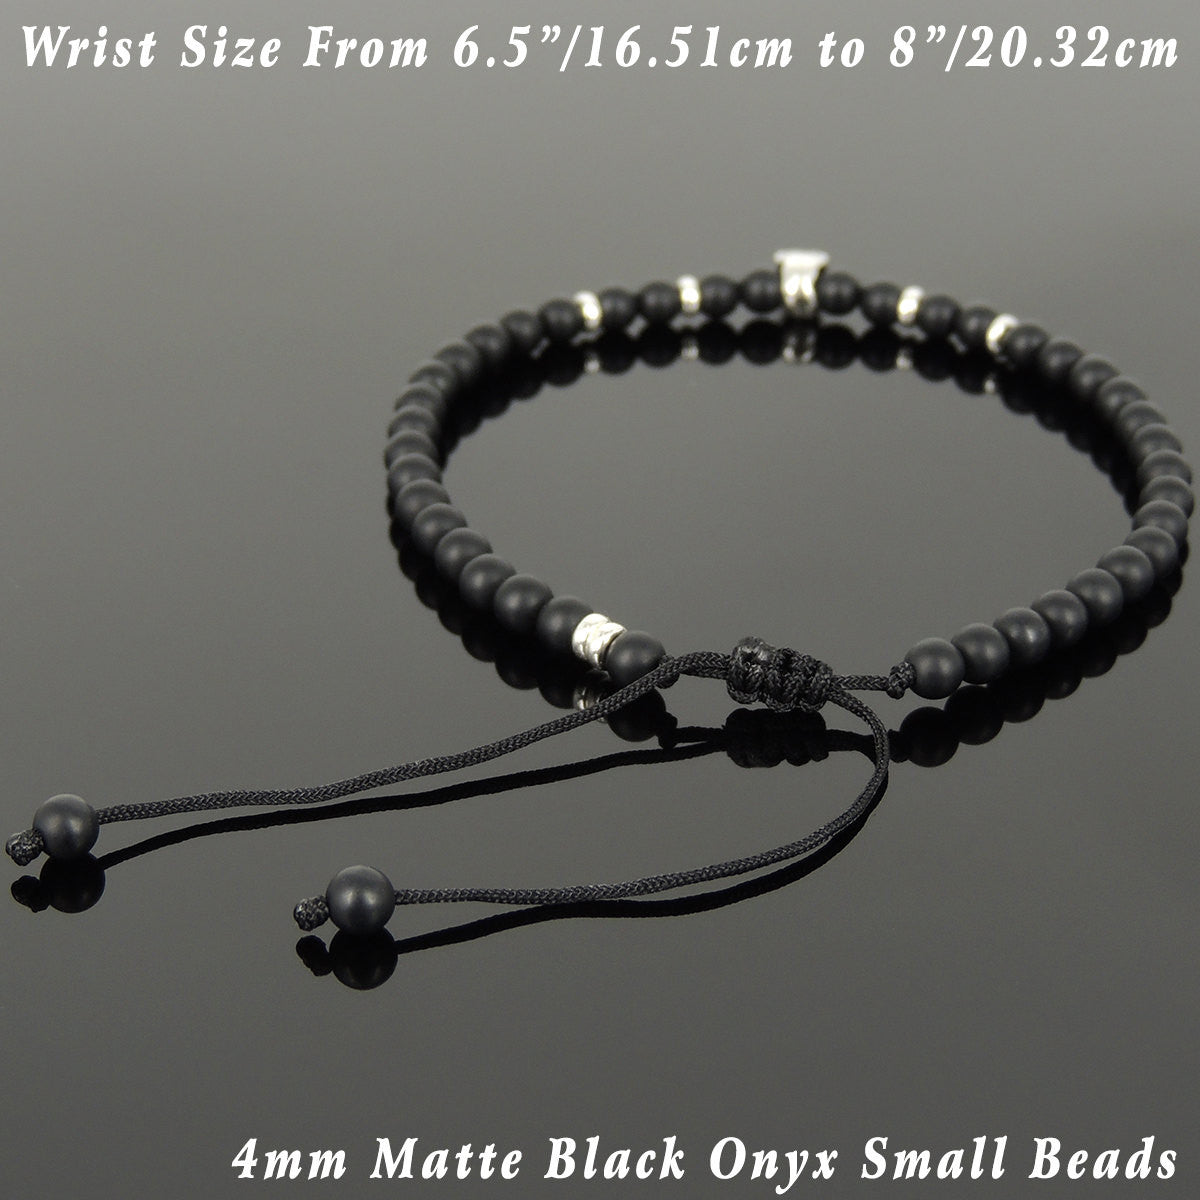 4mm Matte Black Onyx Adjustable Braided Gemstone Bracelet with S925 Sterling Silver Skull & Spacers Bead - Handmade by Gem & Silver BR1070